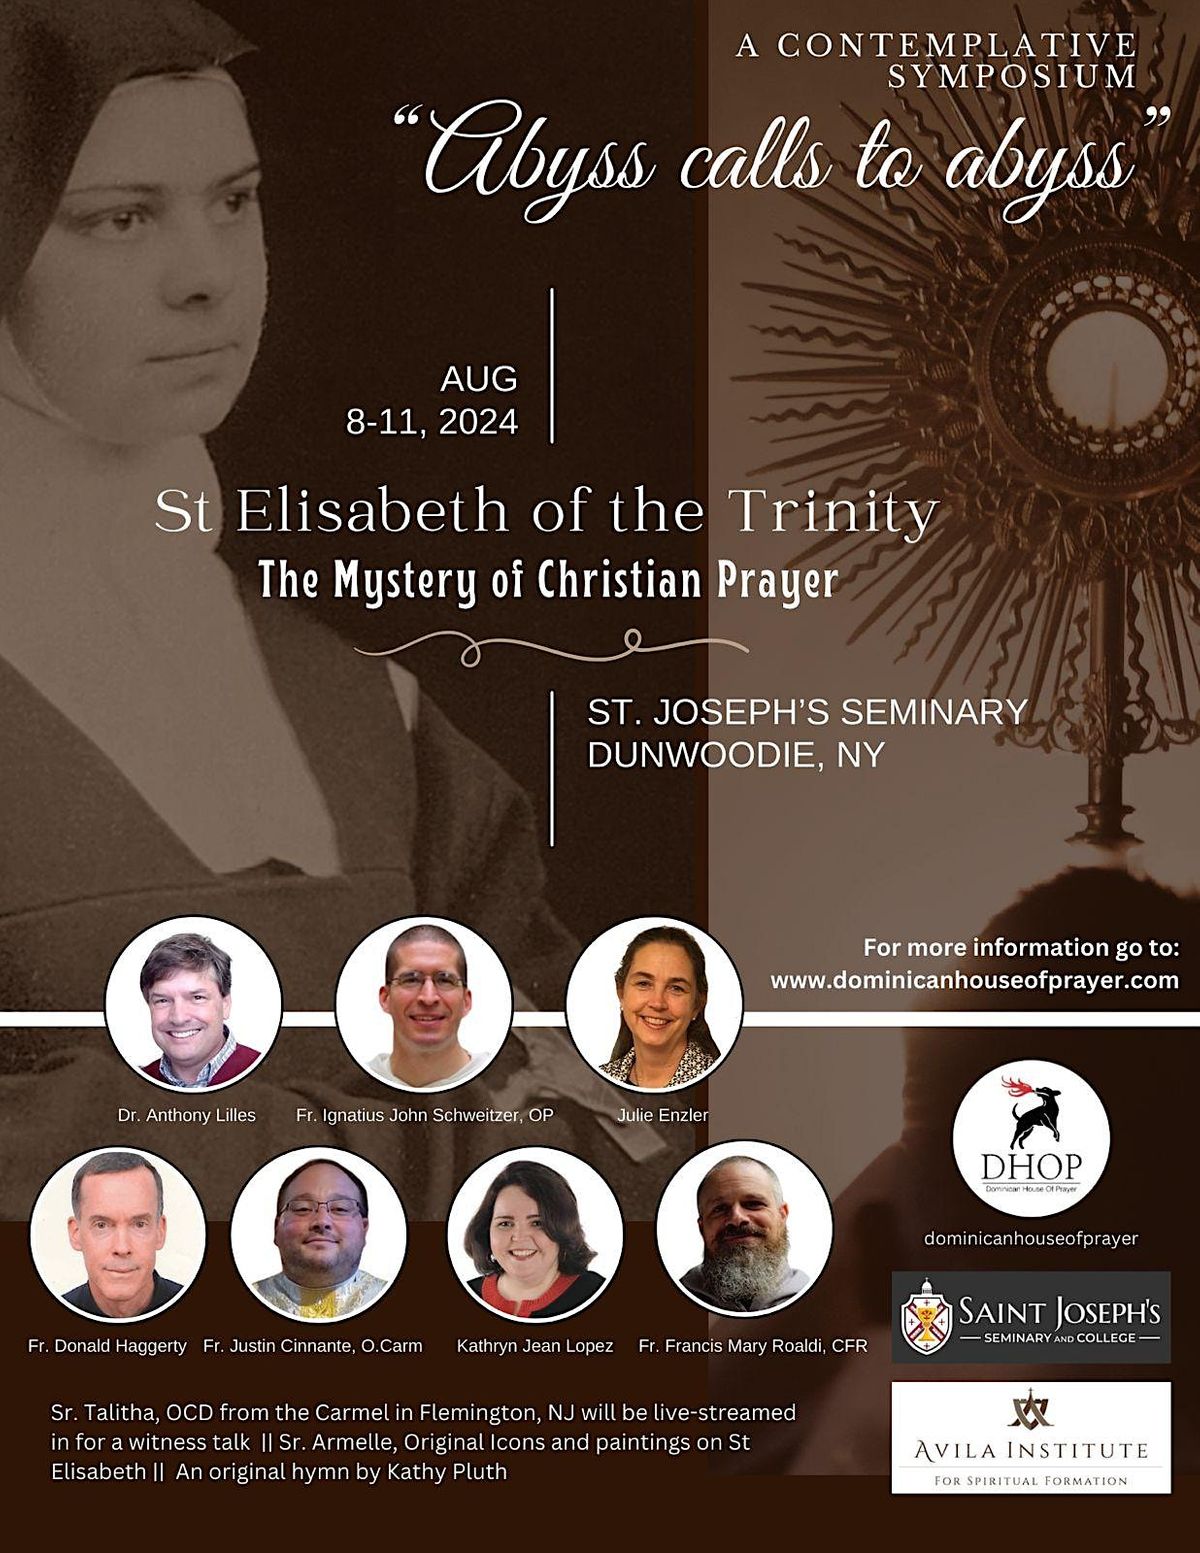 \u201cSaint Elisabeth of the Trinity: The Mystery of Christian Prayer" Symposium